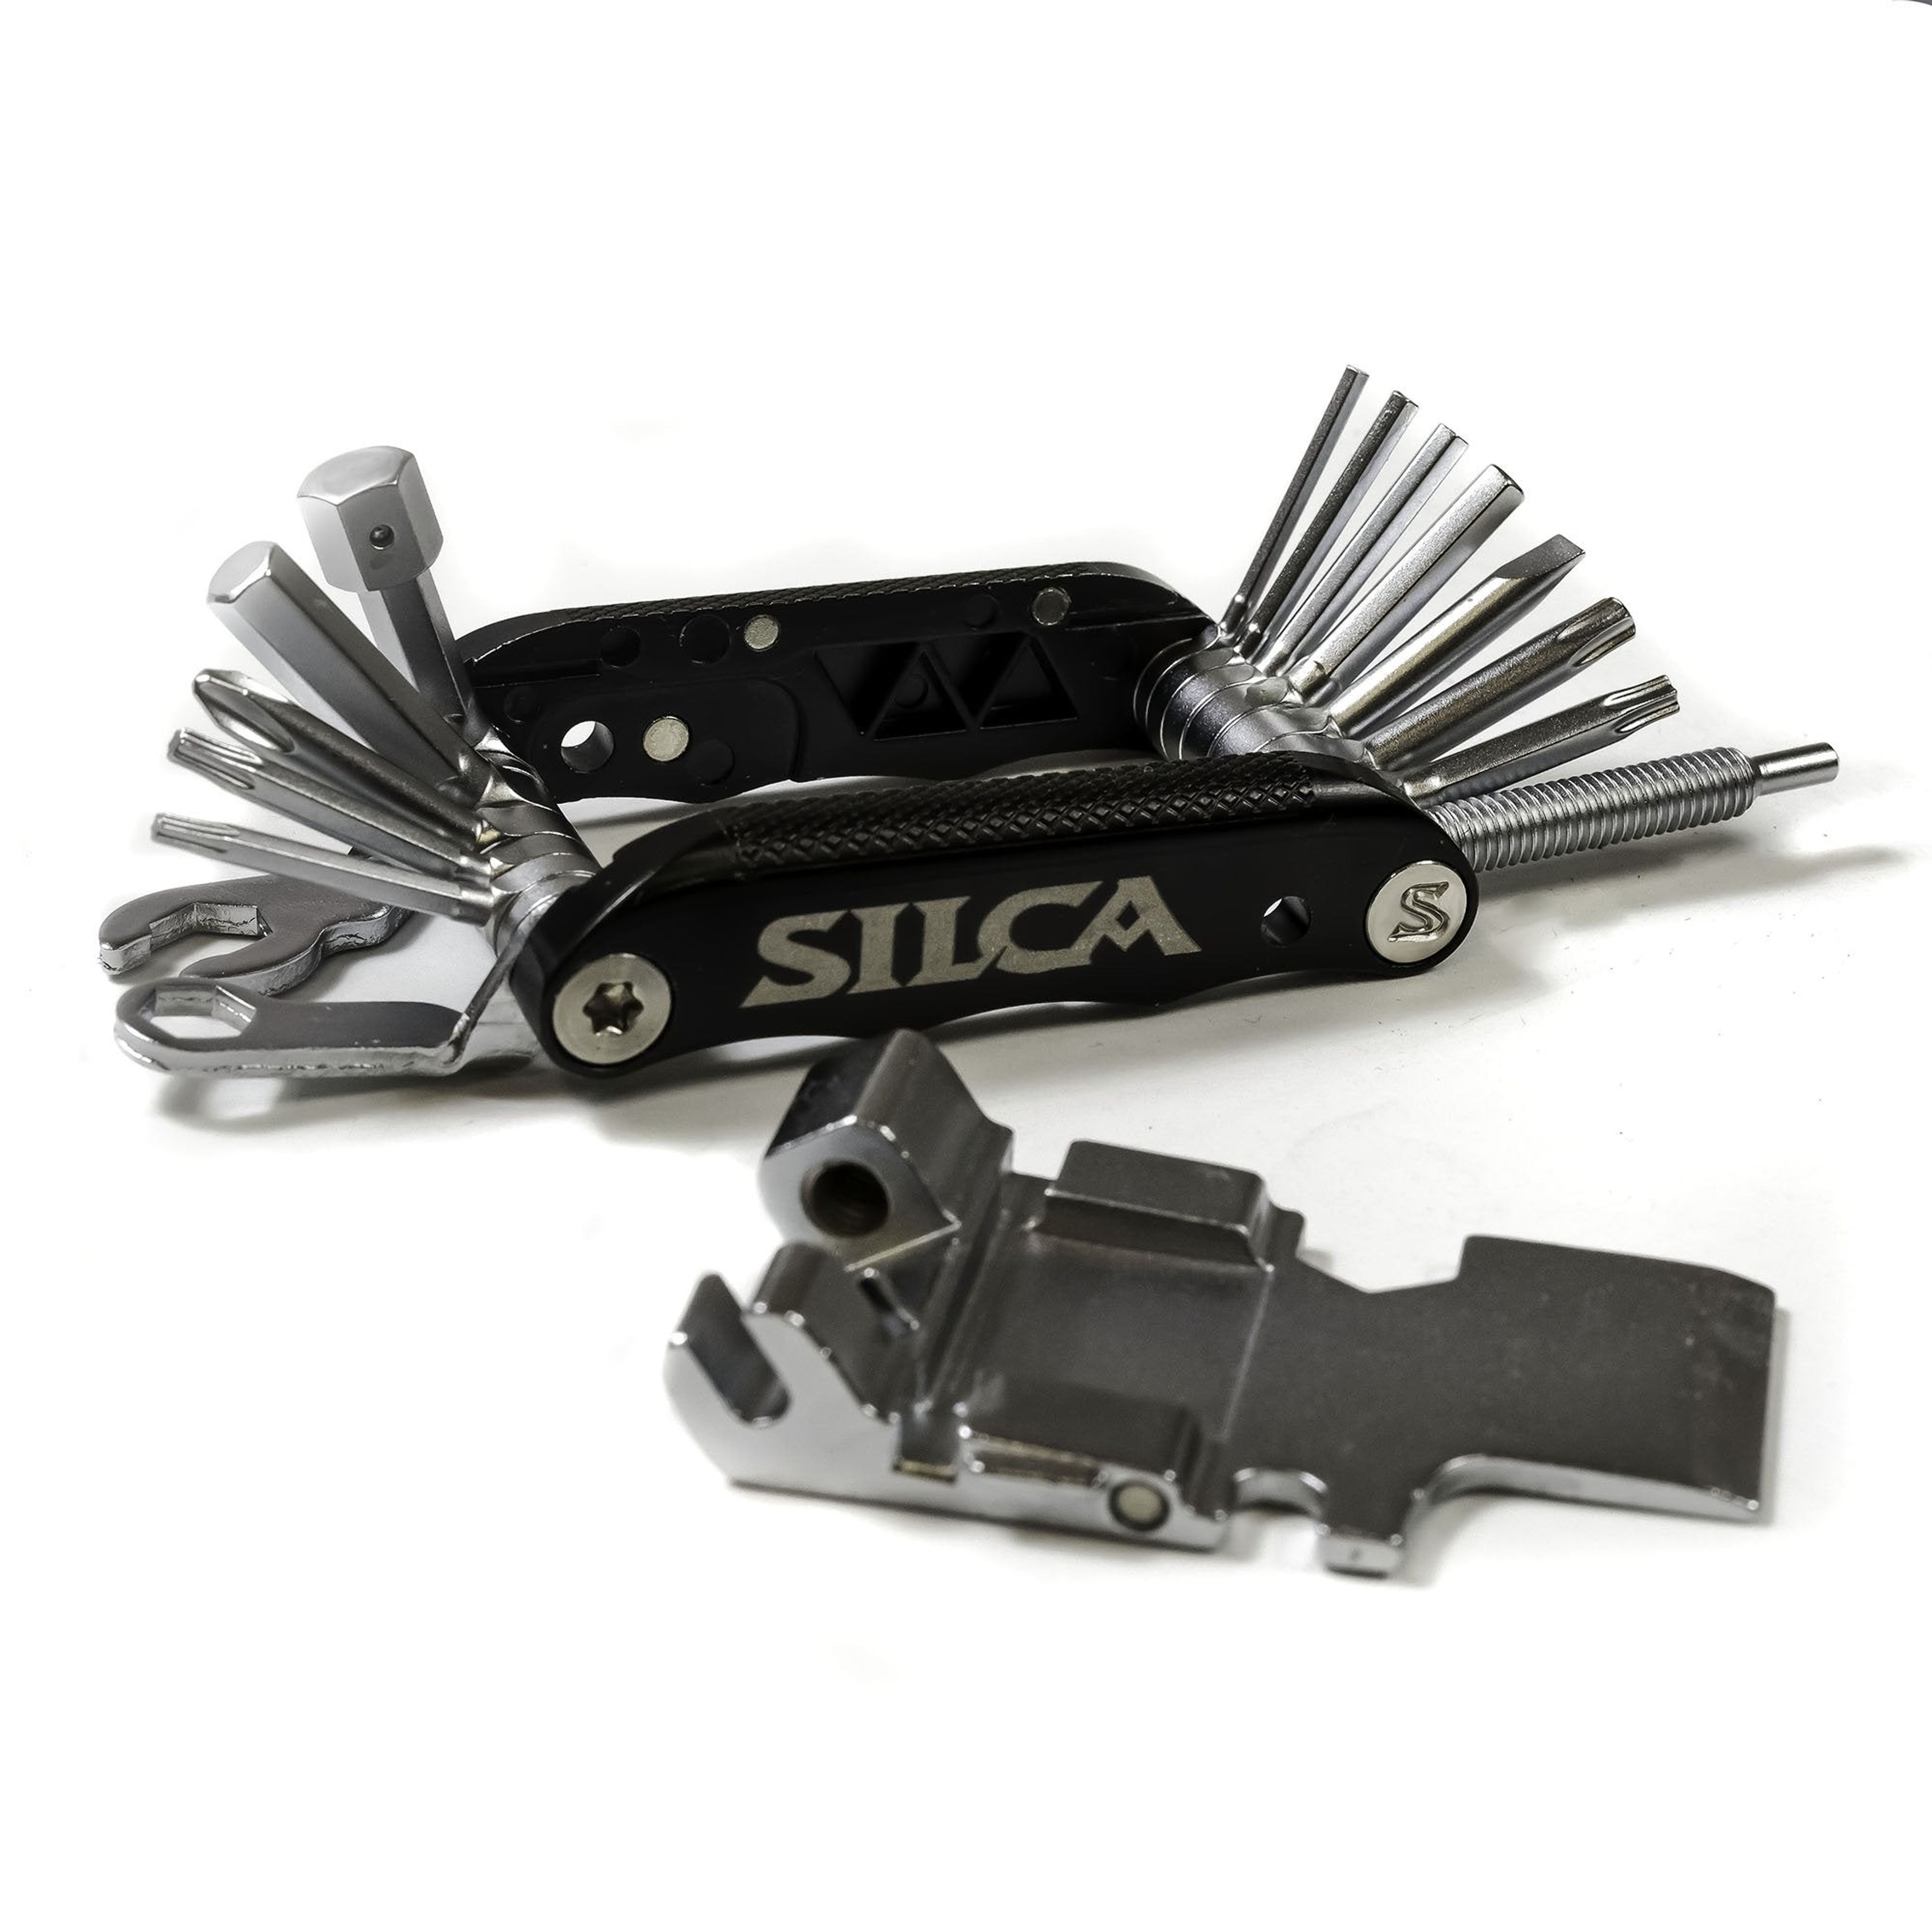 Silca Folding Multi-Tools